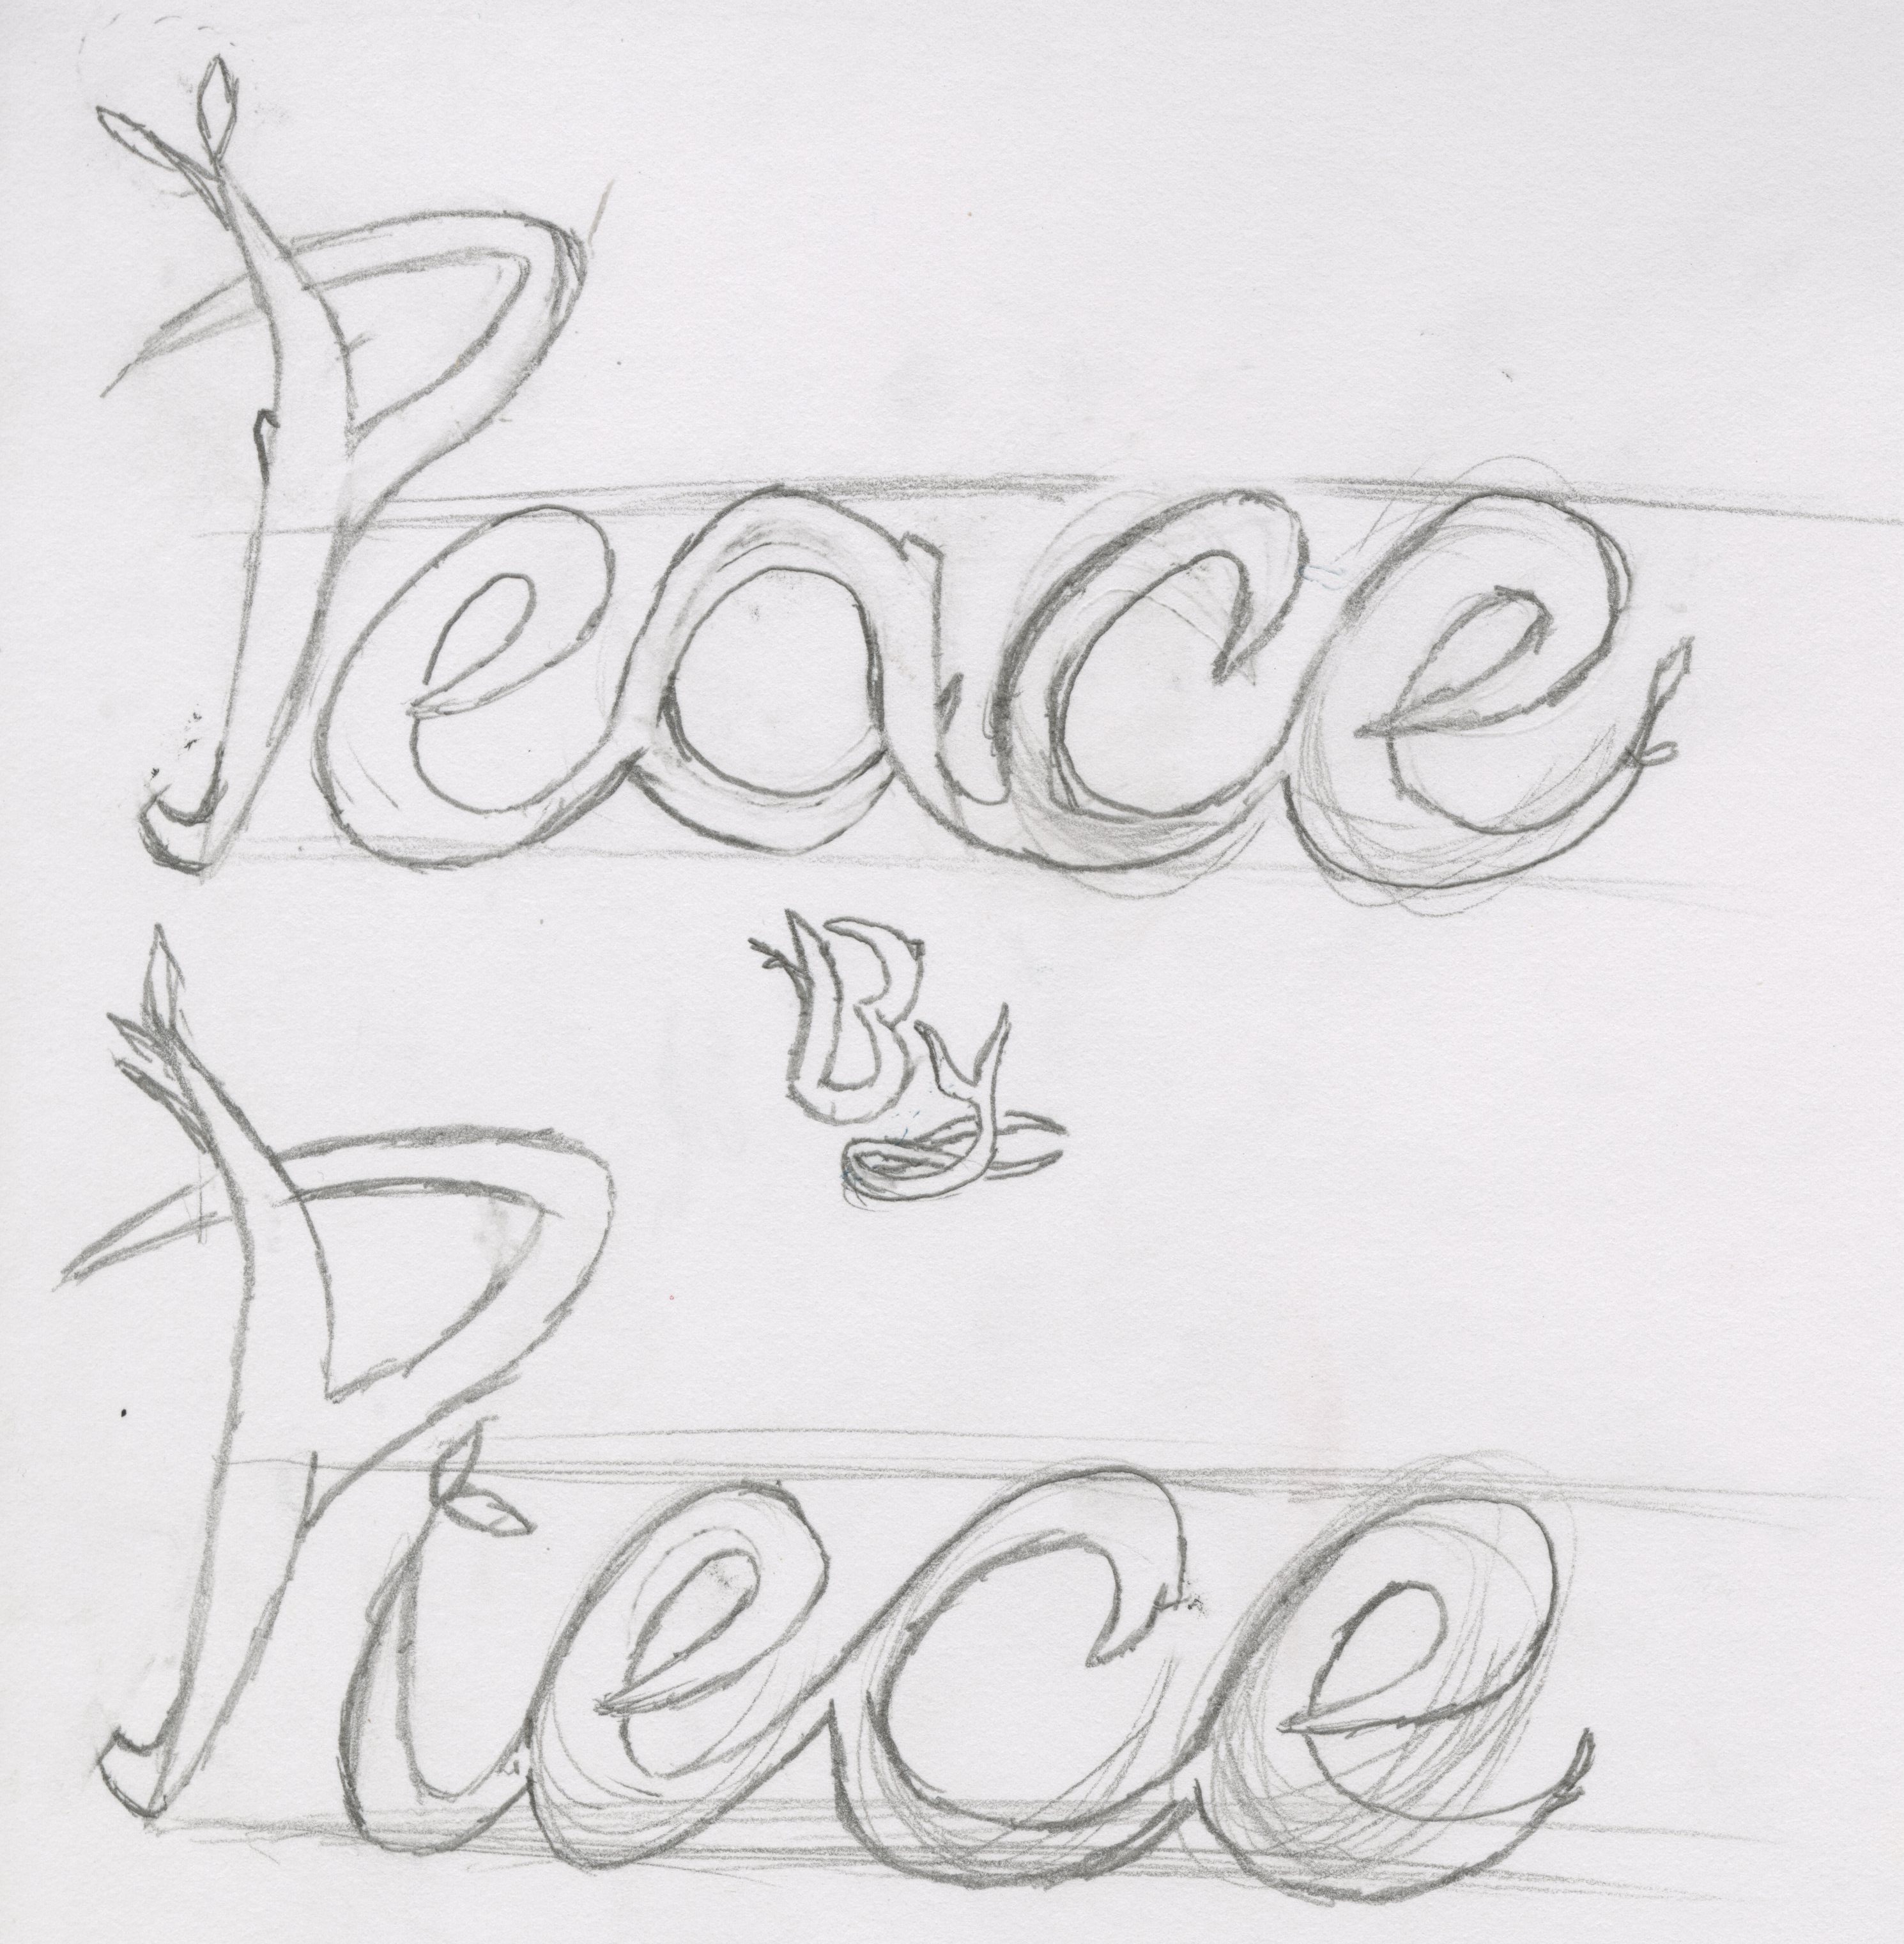 Peace By Peace Logo